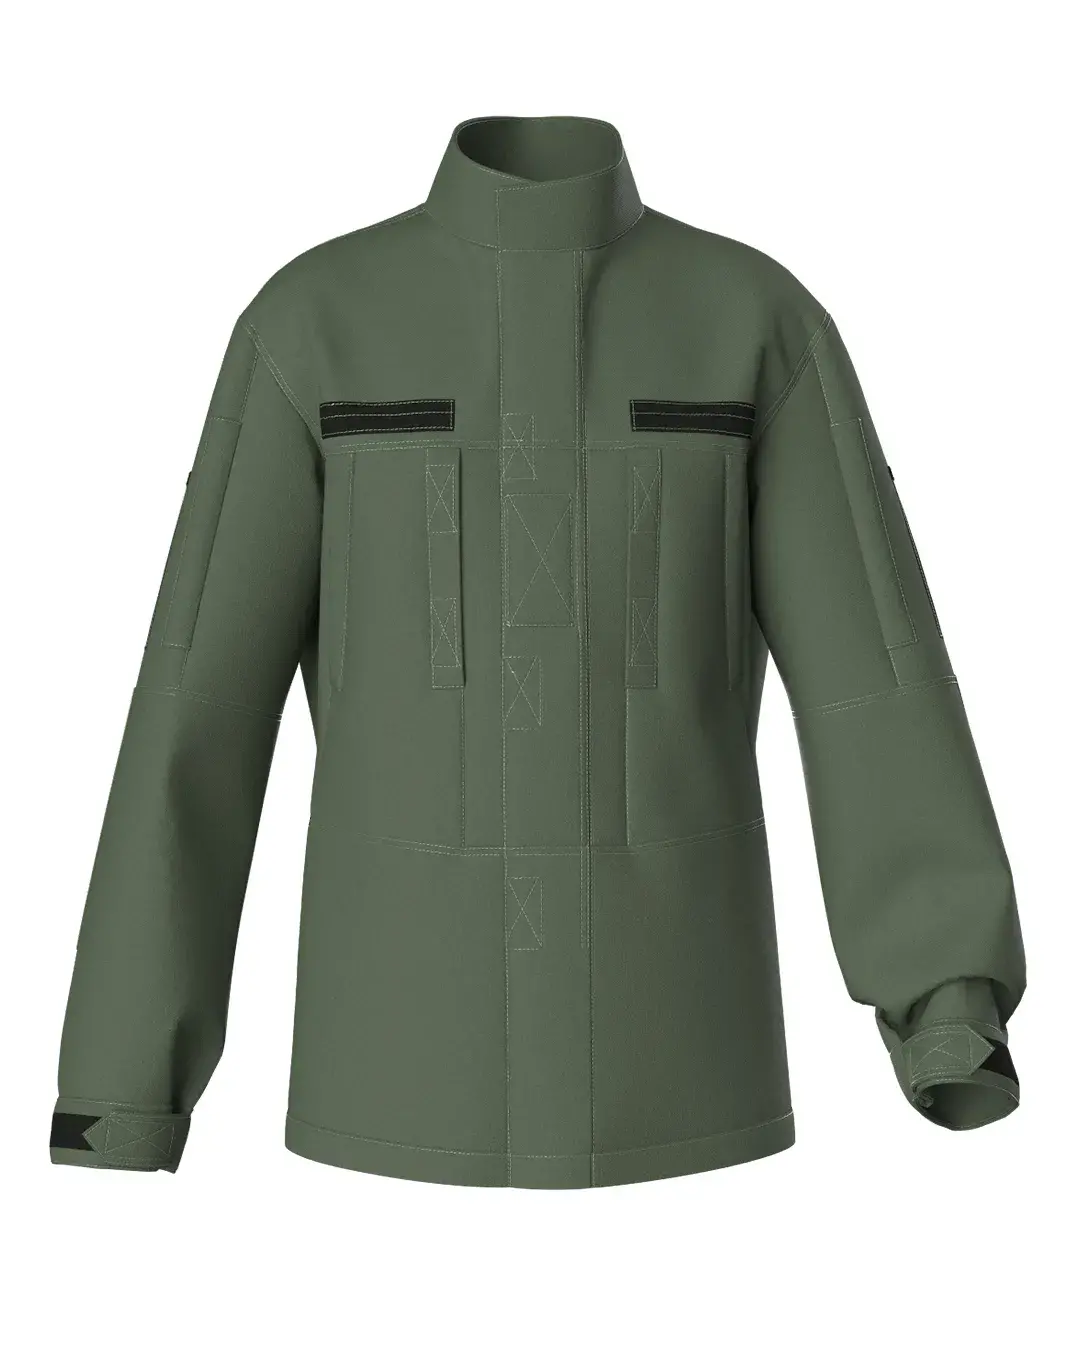 Jacket from the summer field uniform (2023)